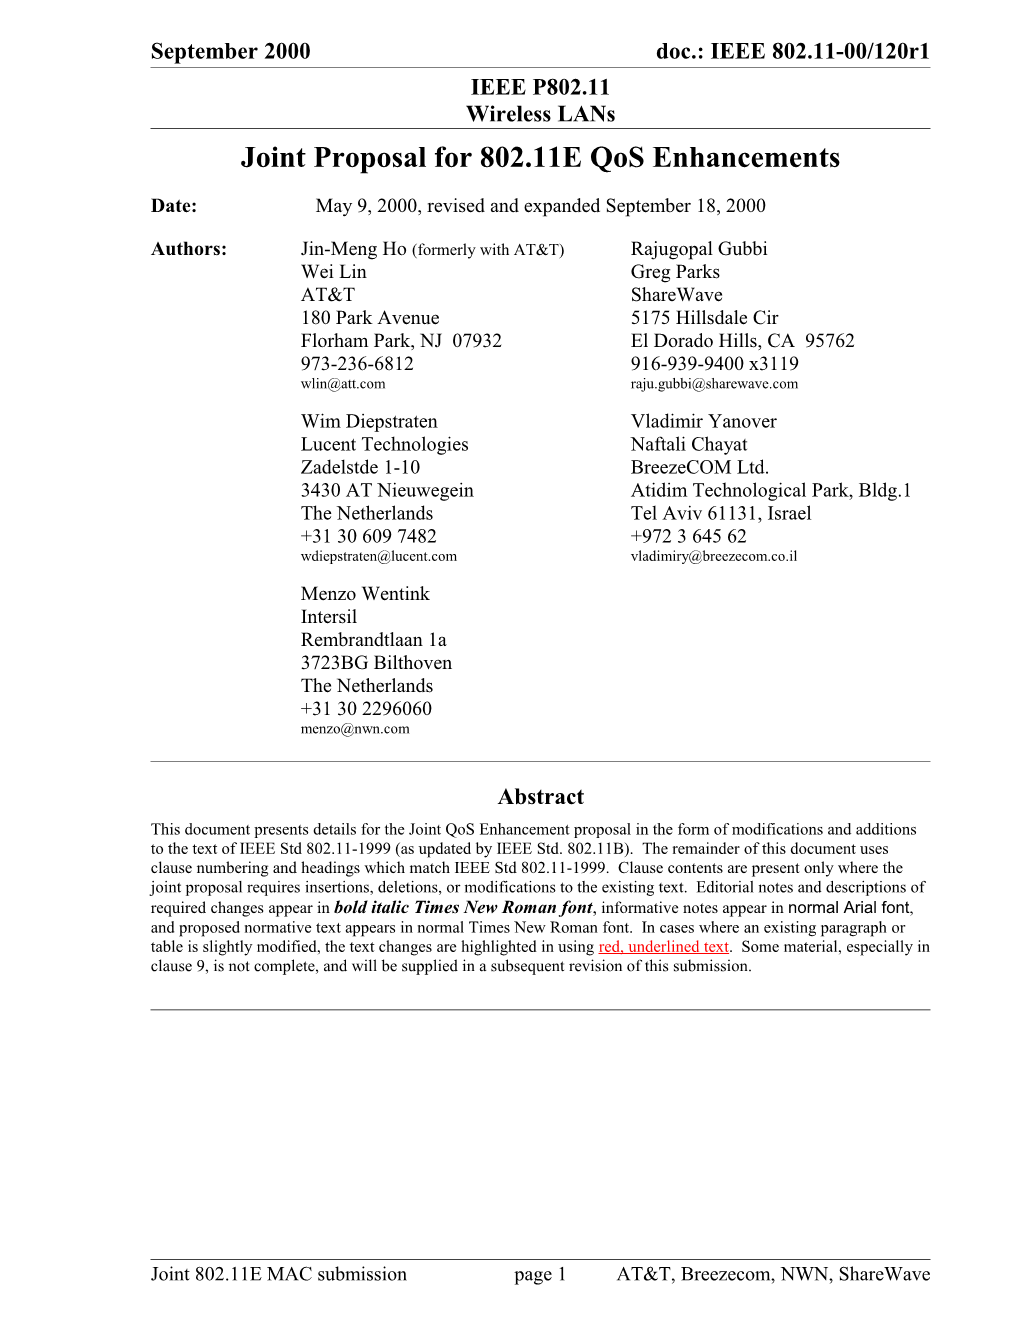 Joint Proposal for 802.11E Qos Enhancements